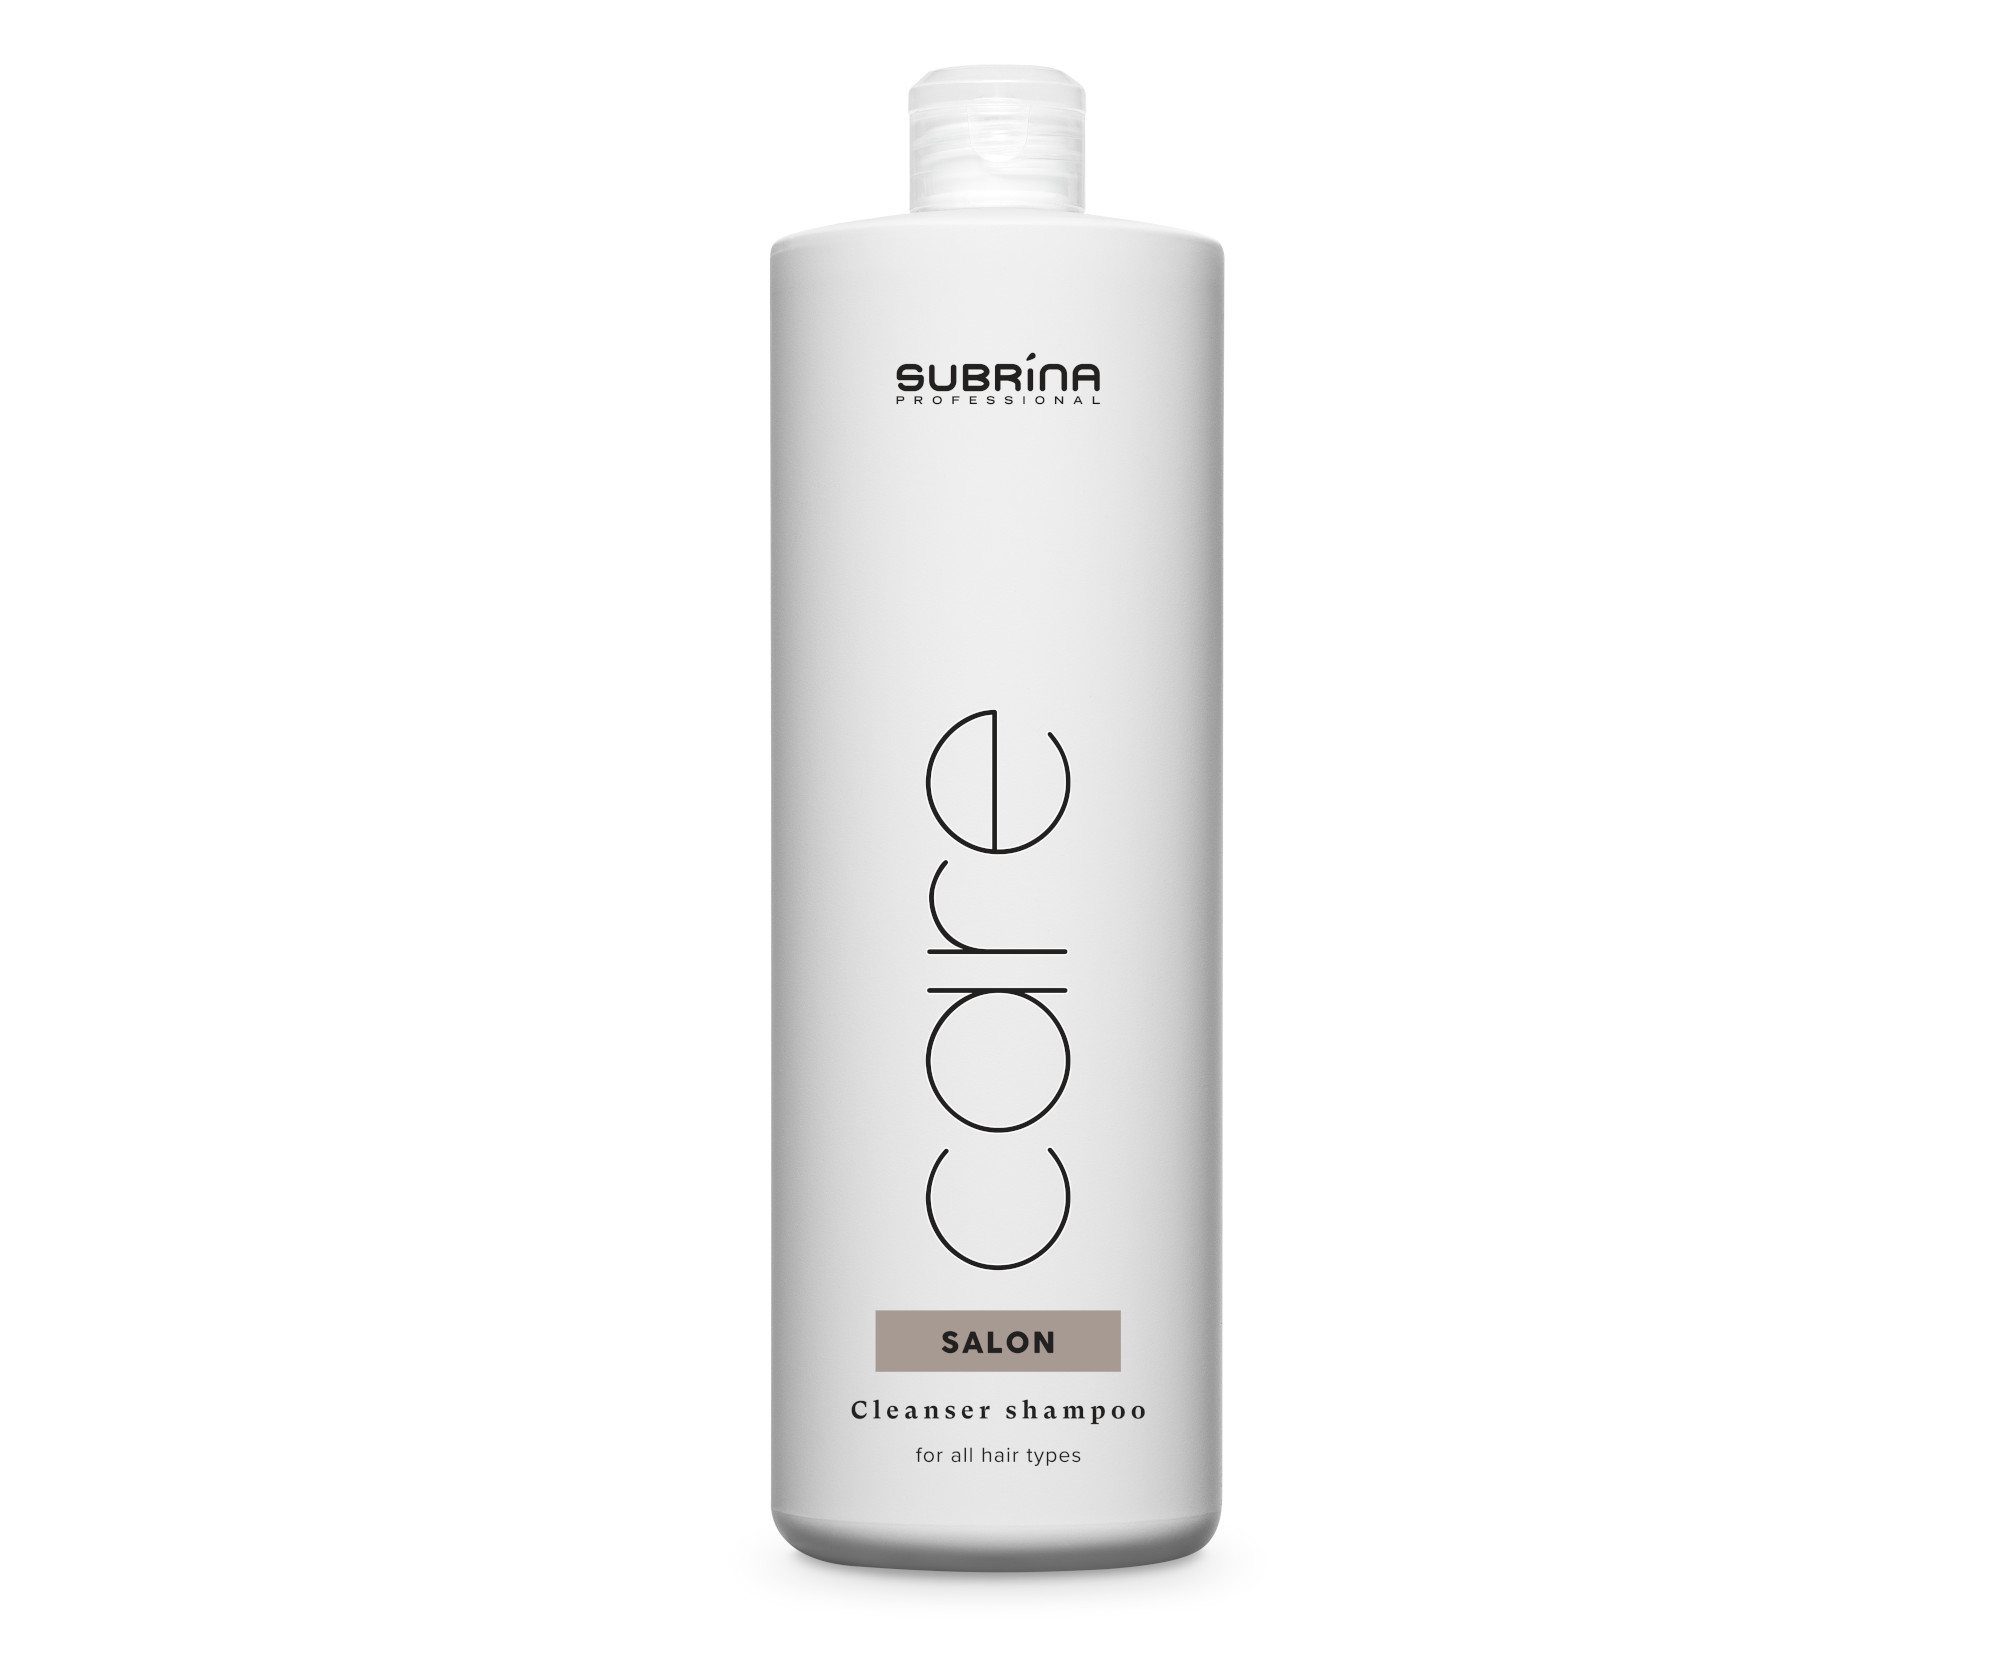 Čistící šampon Subrina Professional Salon Cleanser Shampoo - 1000 ml (060291) + dárek zdarma